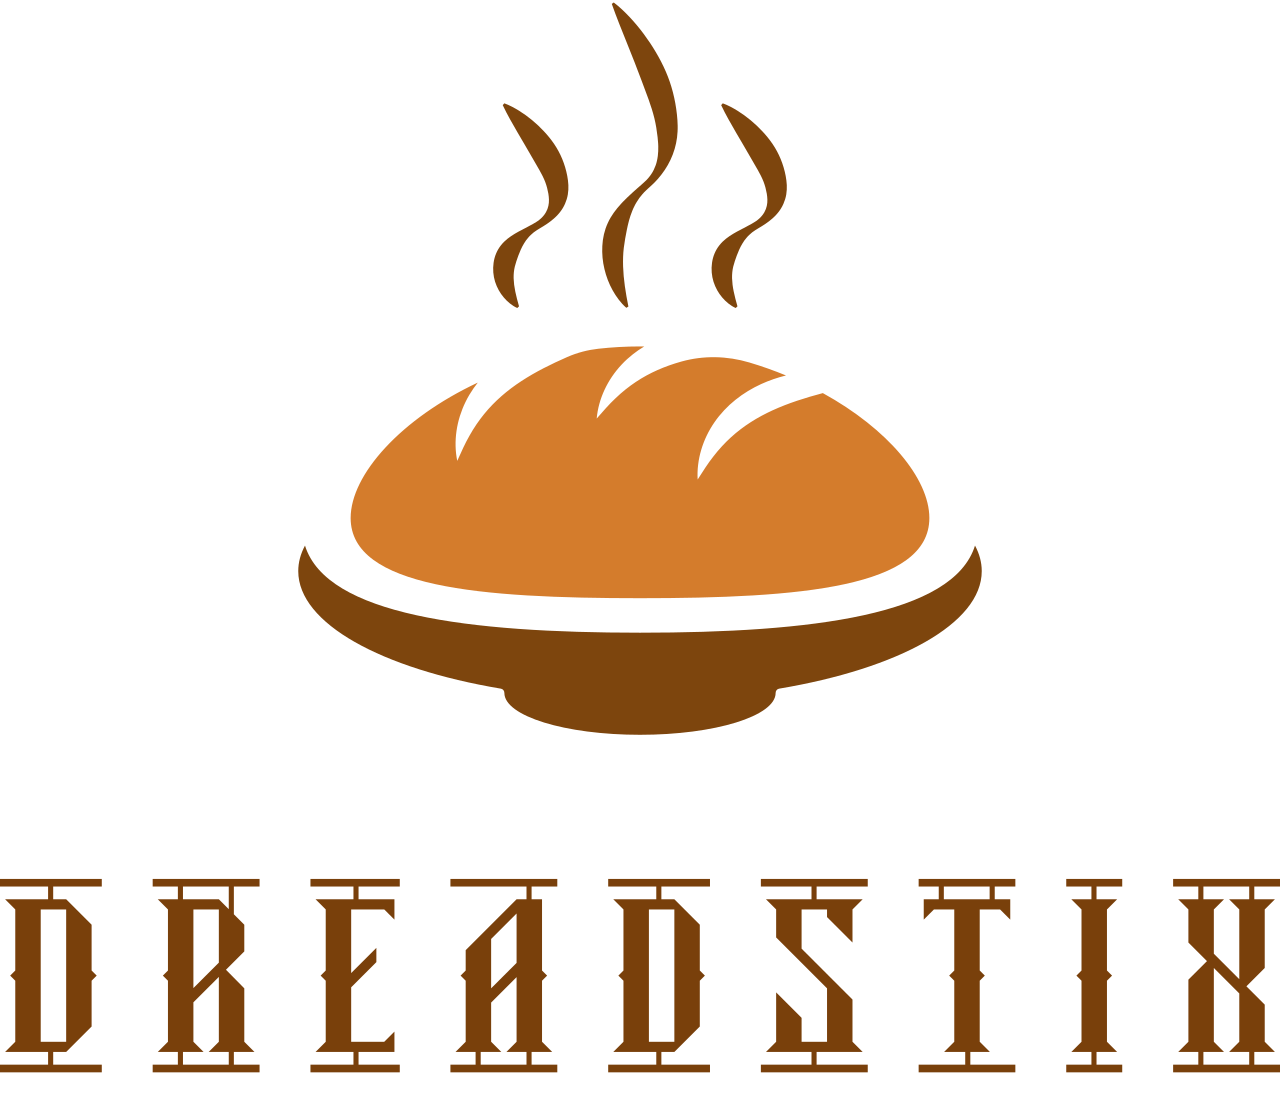 dreadstix's logo